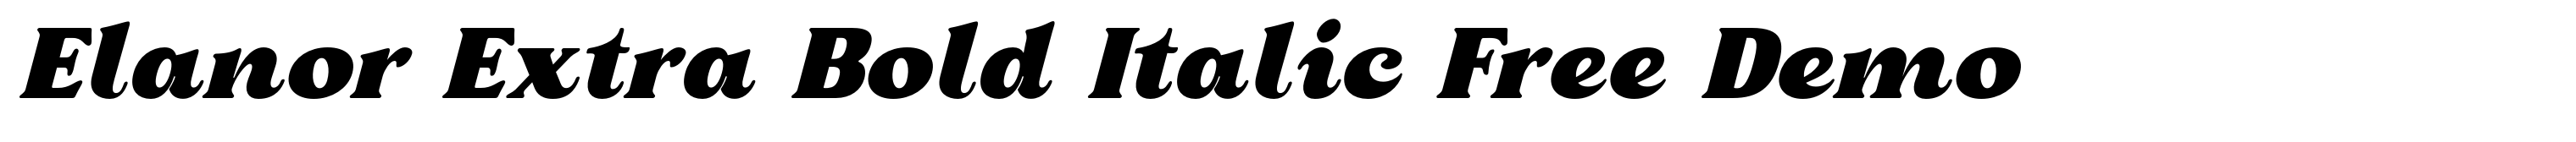 Elanor Extra Bold Italic Free Demo